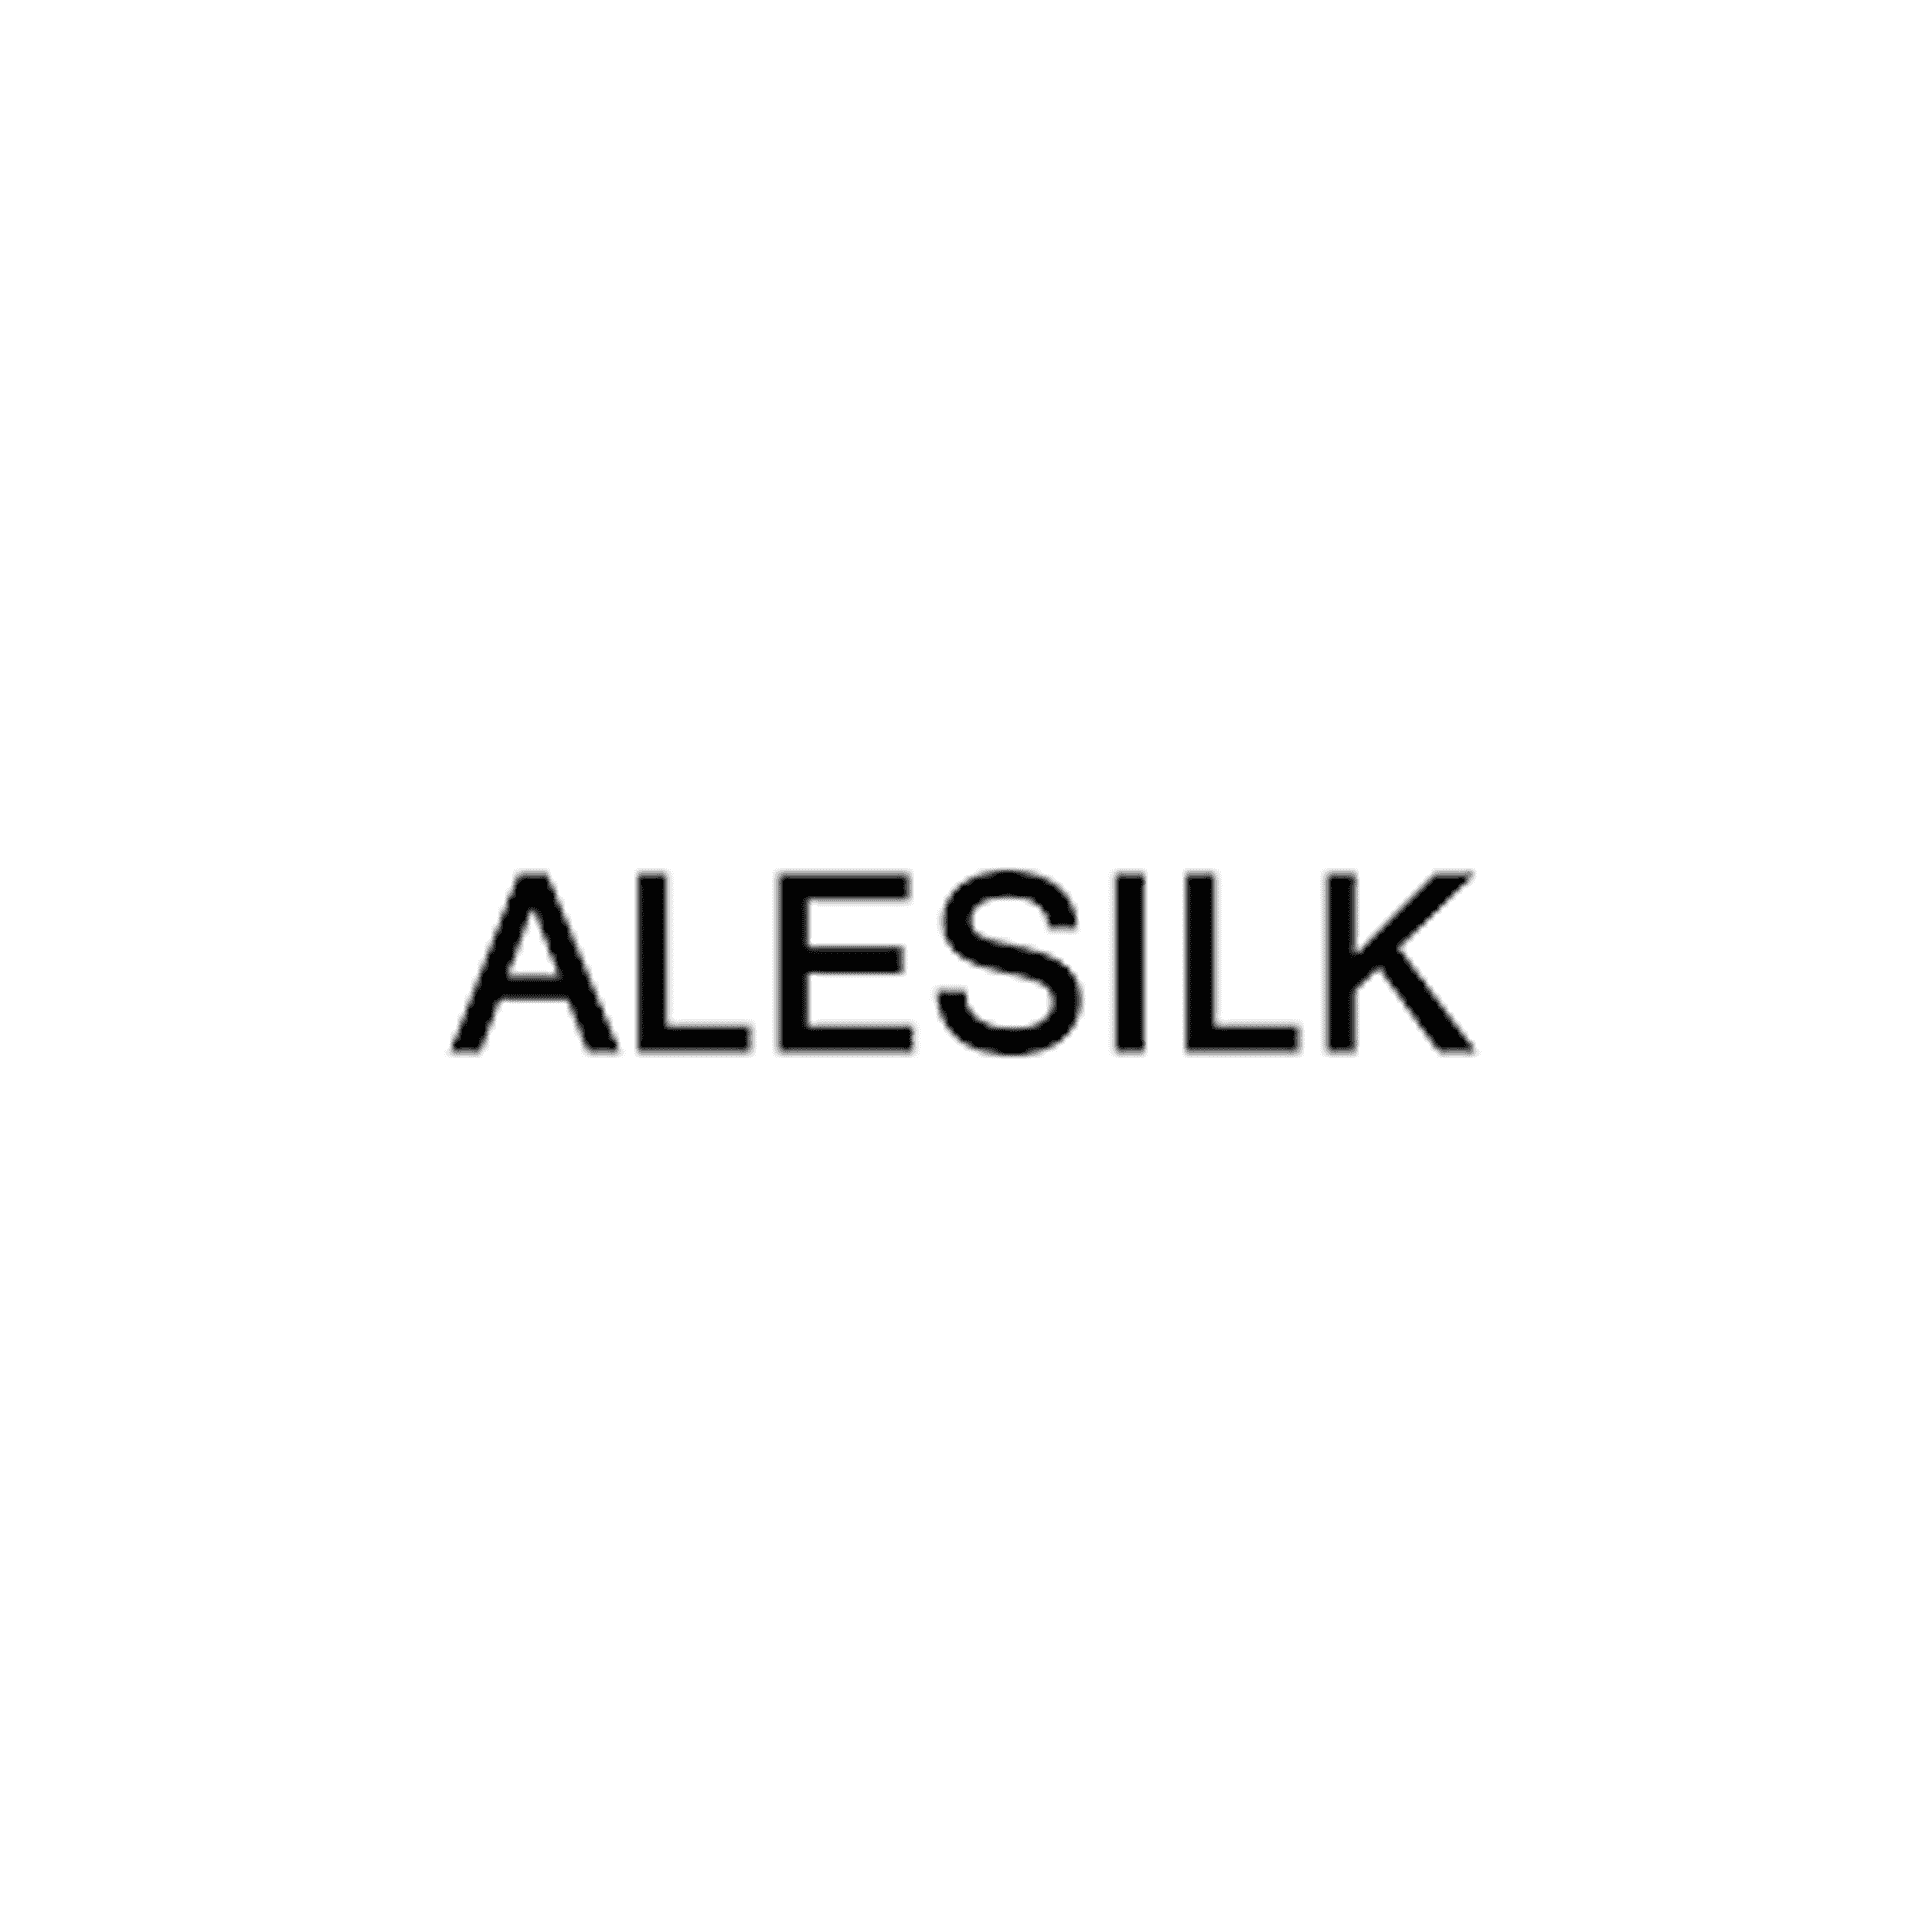 Official sponsor. Alesilk